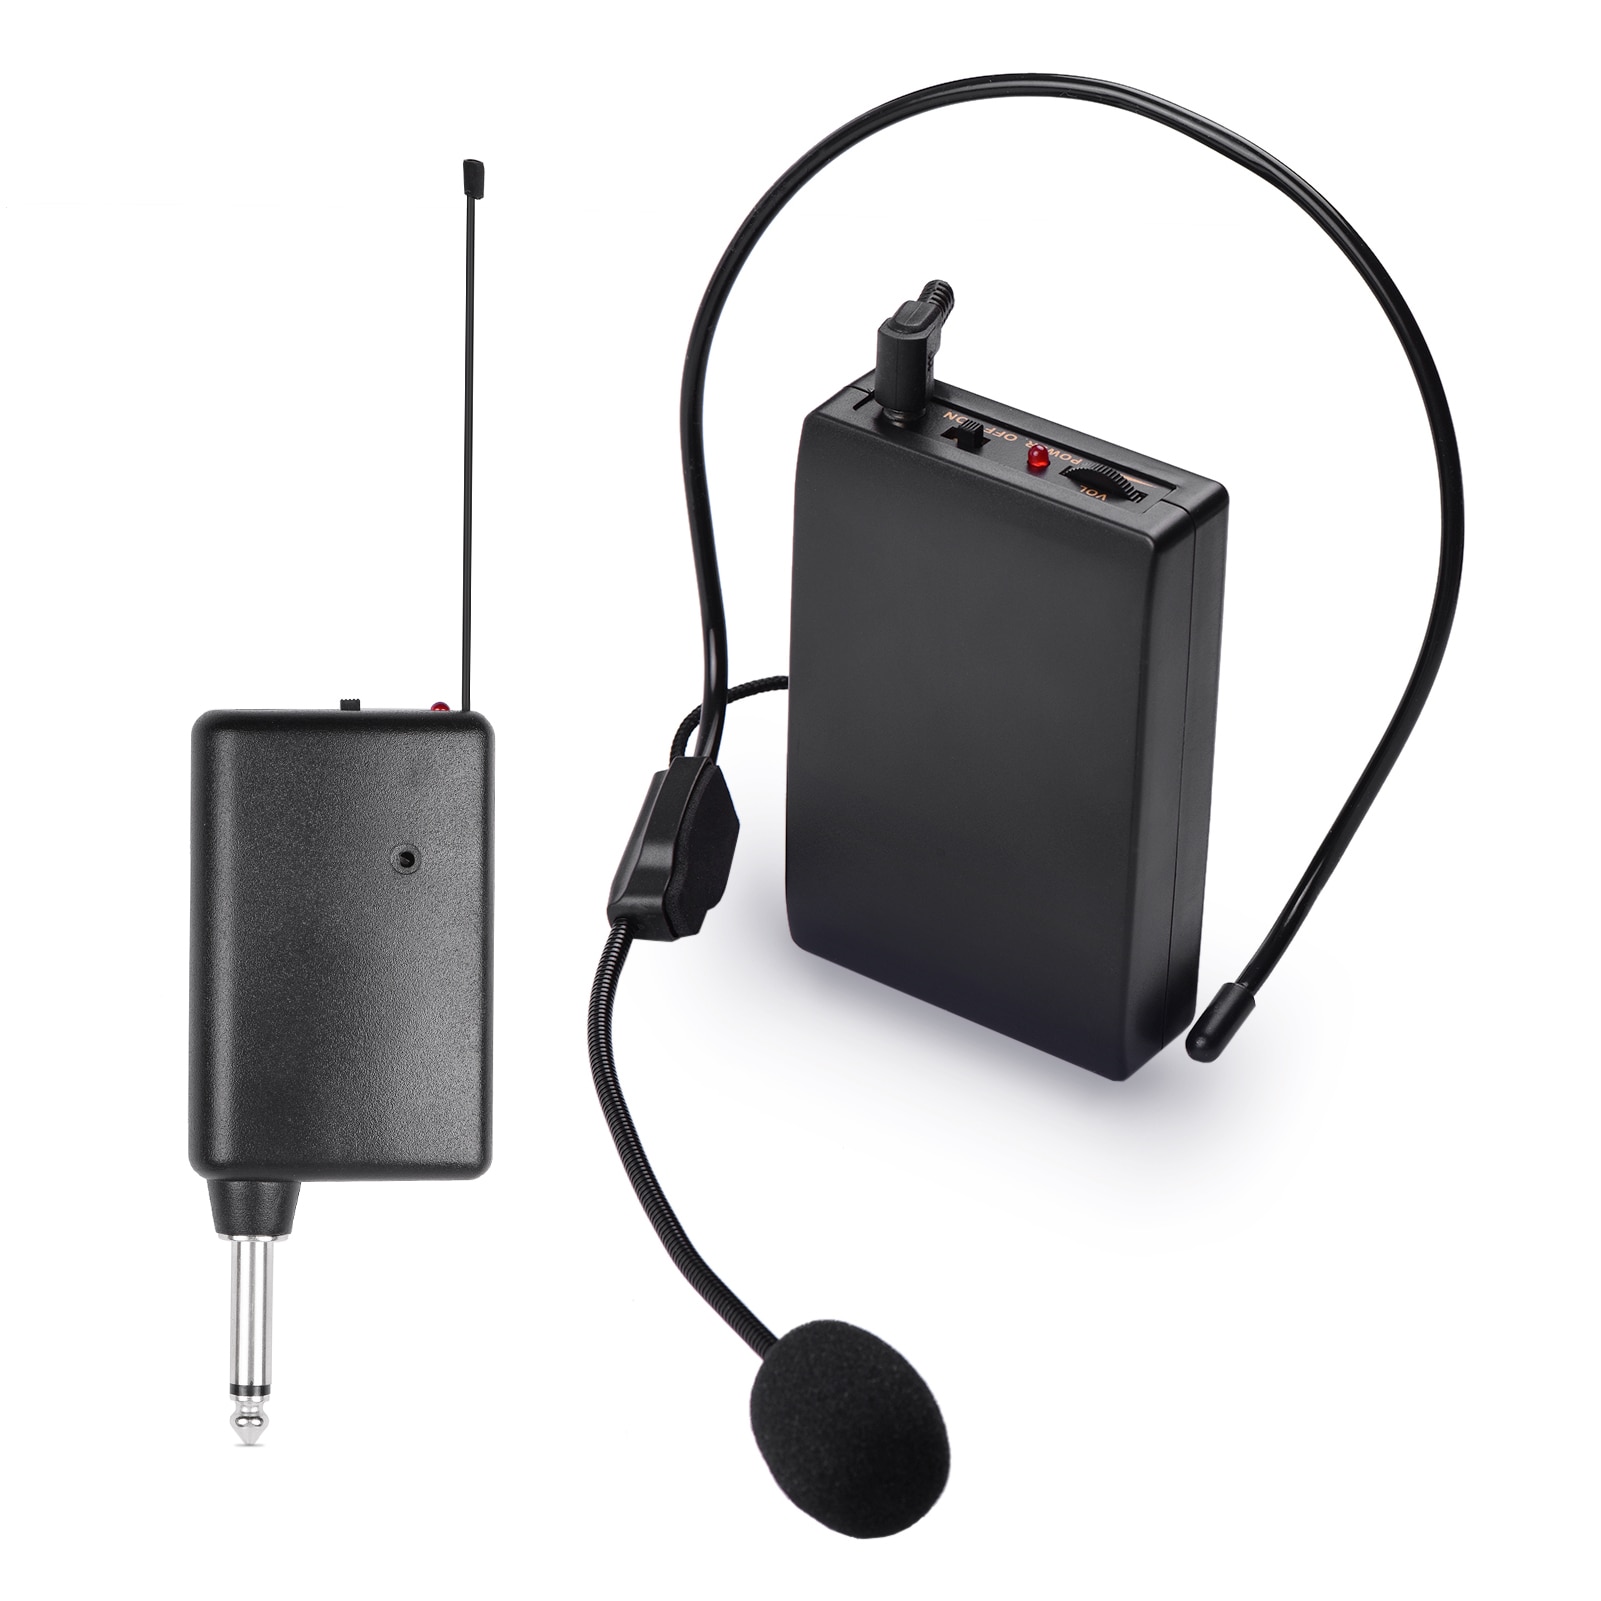 Draagbare Vhf Draadloze Microfoon Systeem Met Headset Microfoon + Bodypack Zender + Mini Receiver Met 6.35Mm Plug Voor Meeting